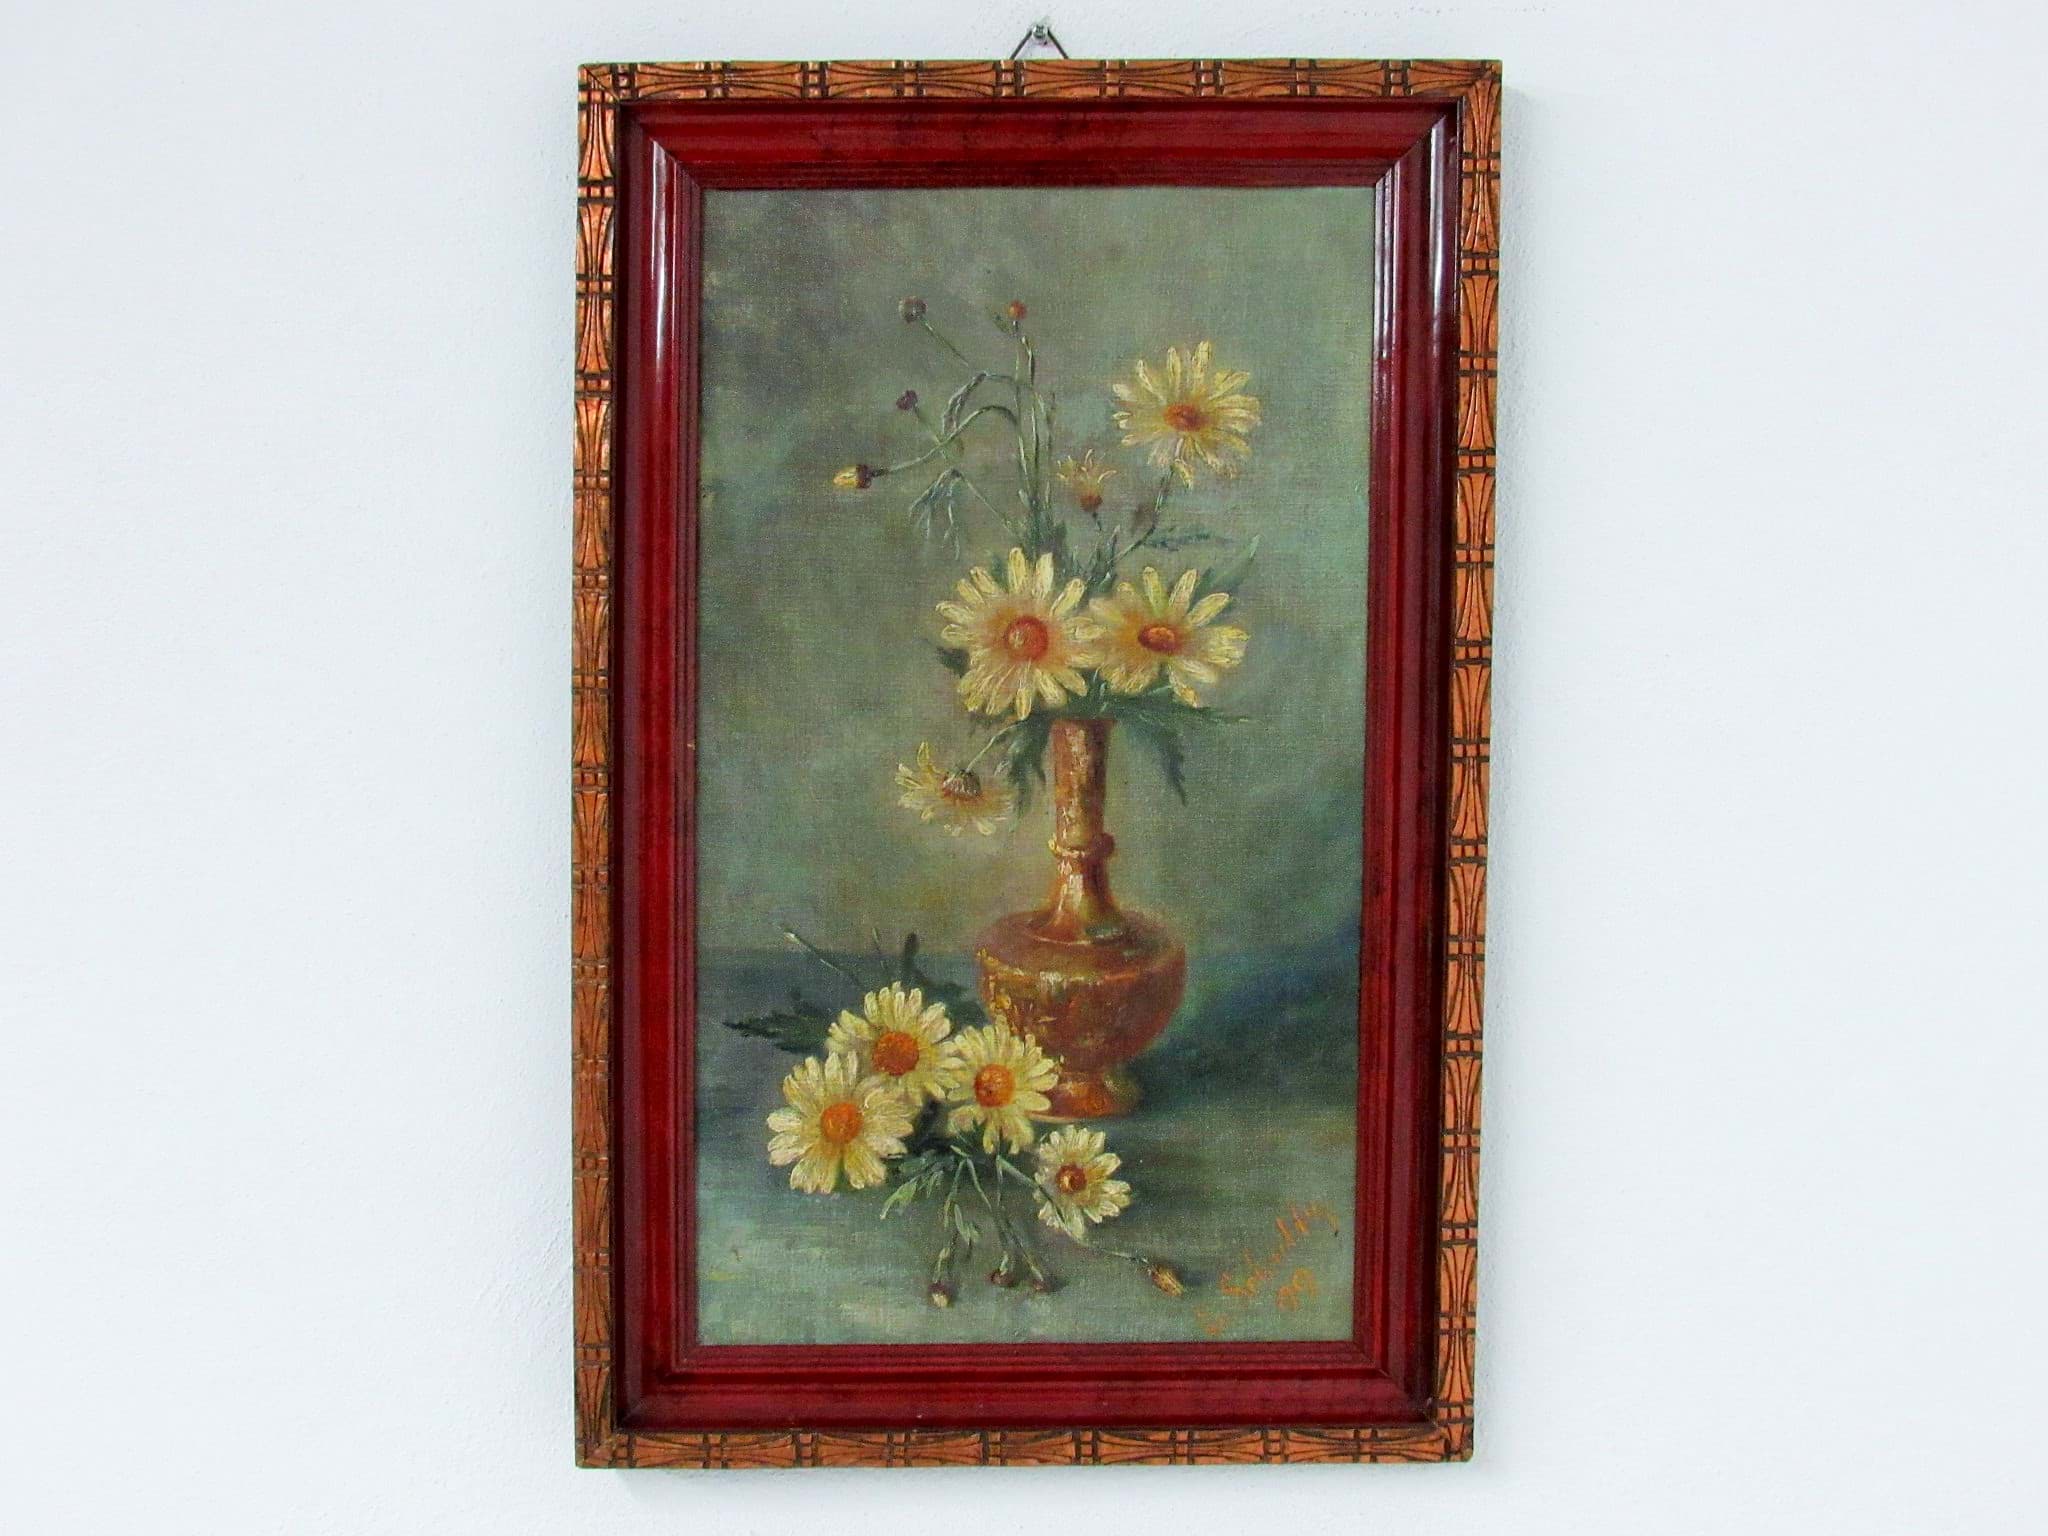 Obraz Antik Gemälde / Ölbild, Blumen Stillleben um 1900, Öl/Malkarton, gerahmt, signiert E. Schultz (?) & datiert